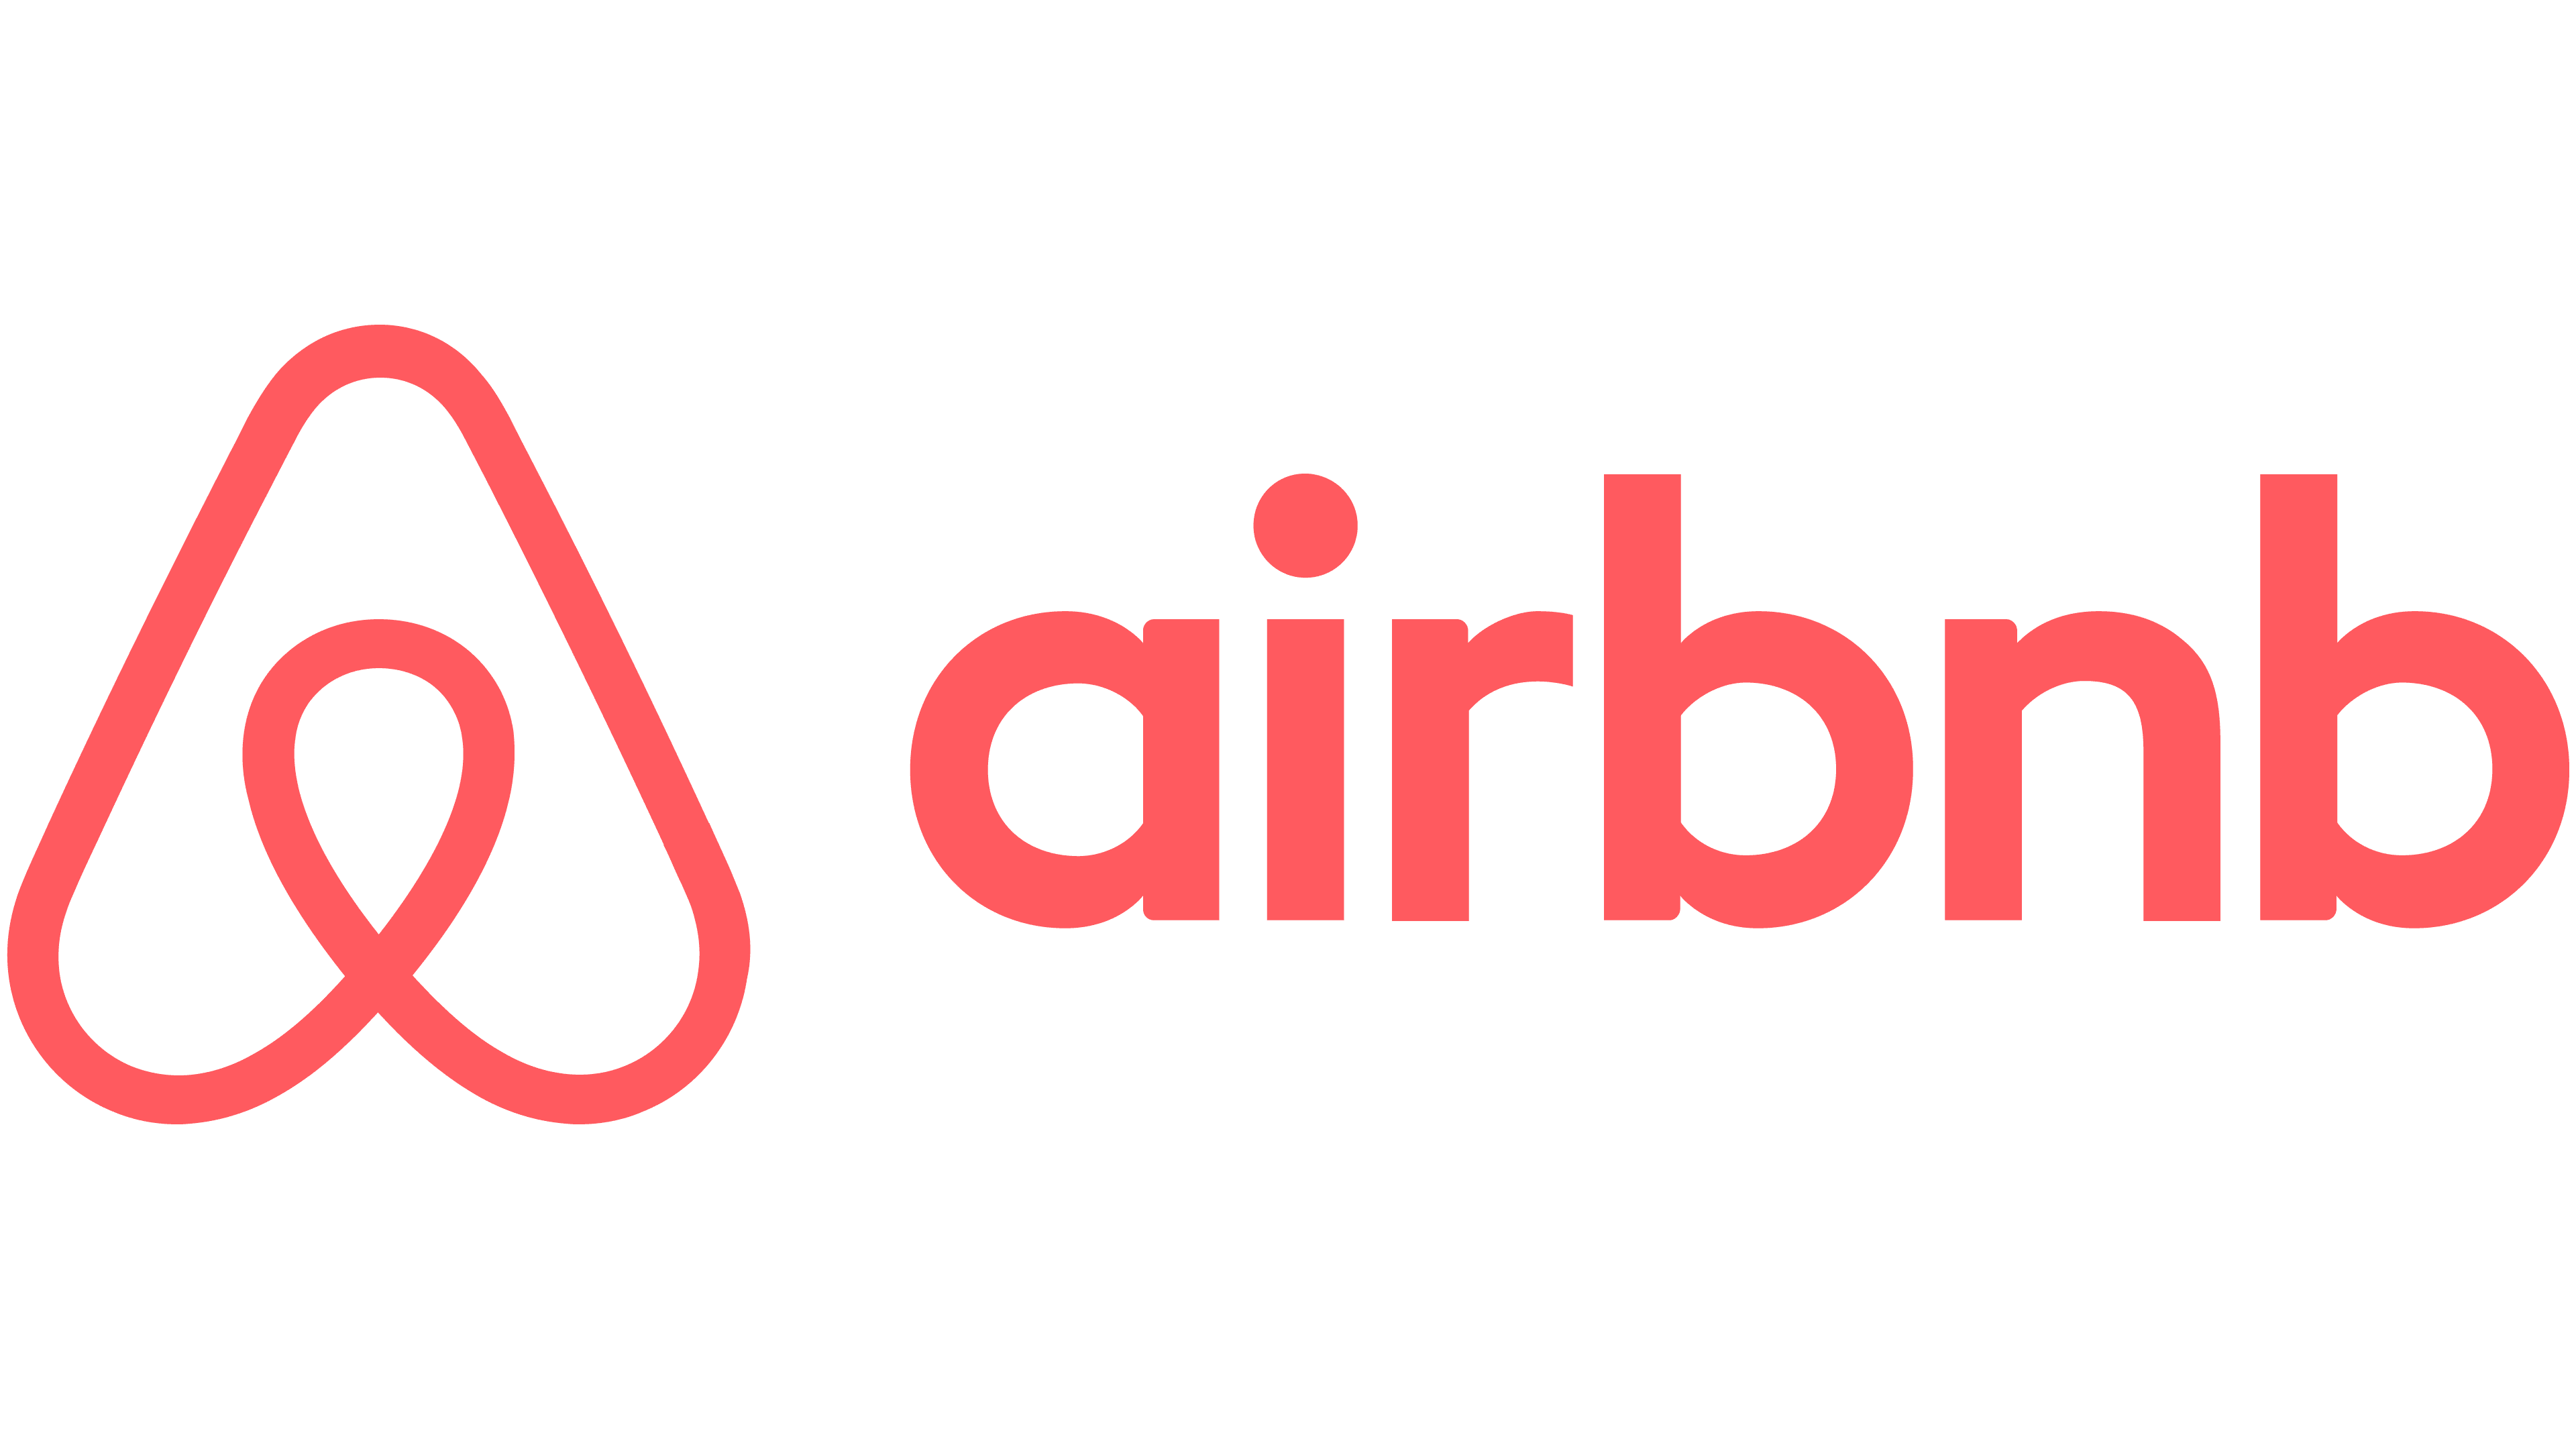 Airbnb Промокоды 